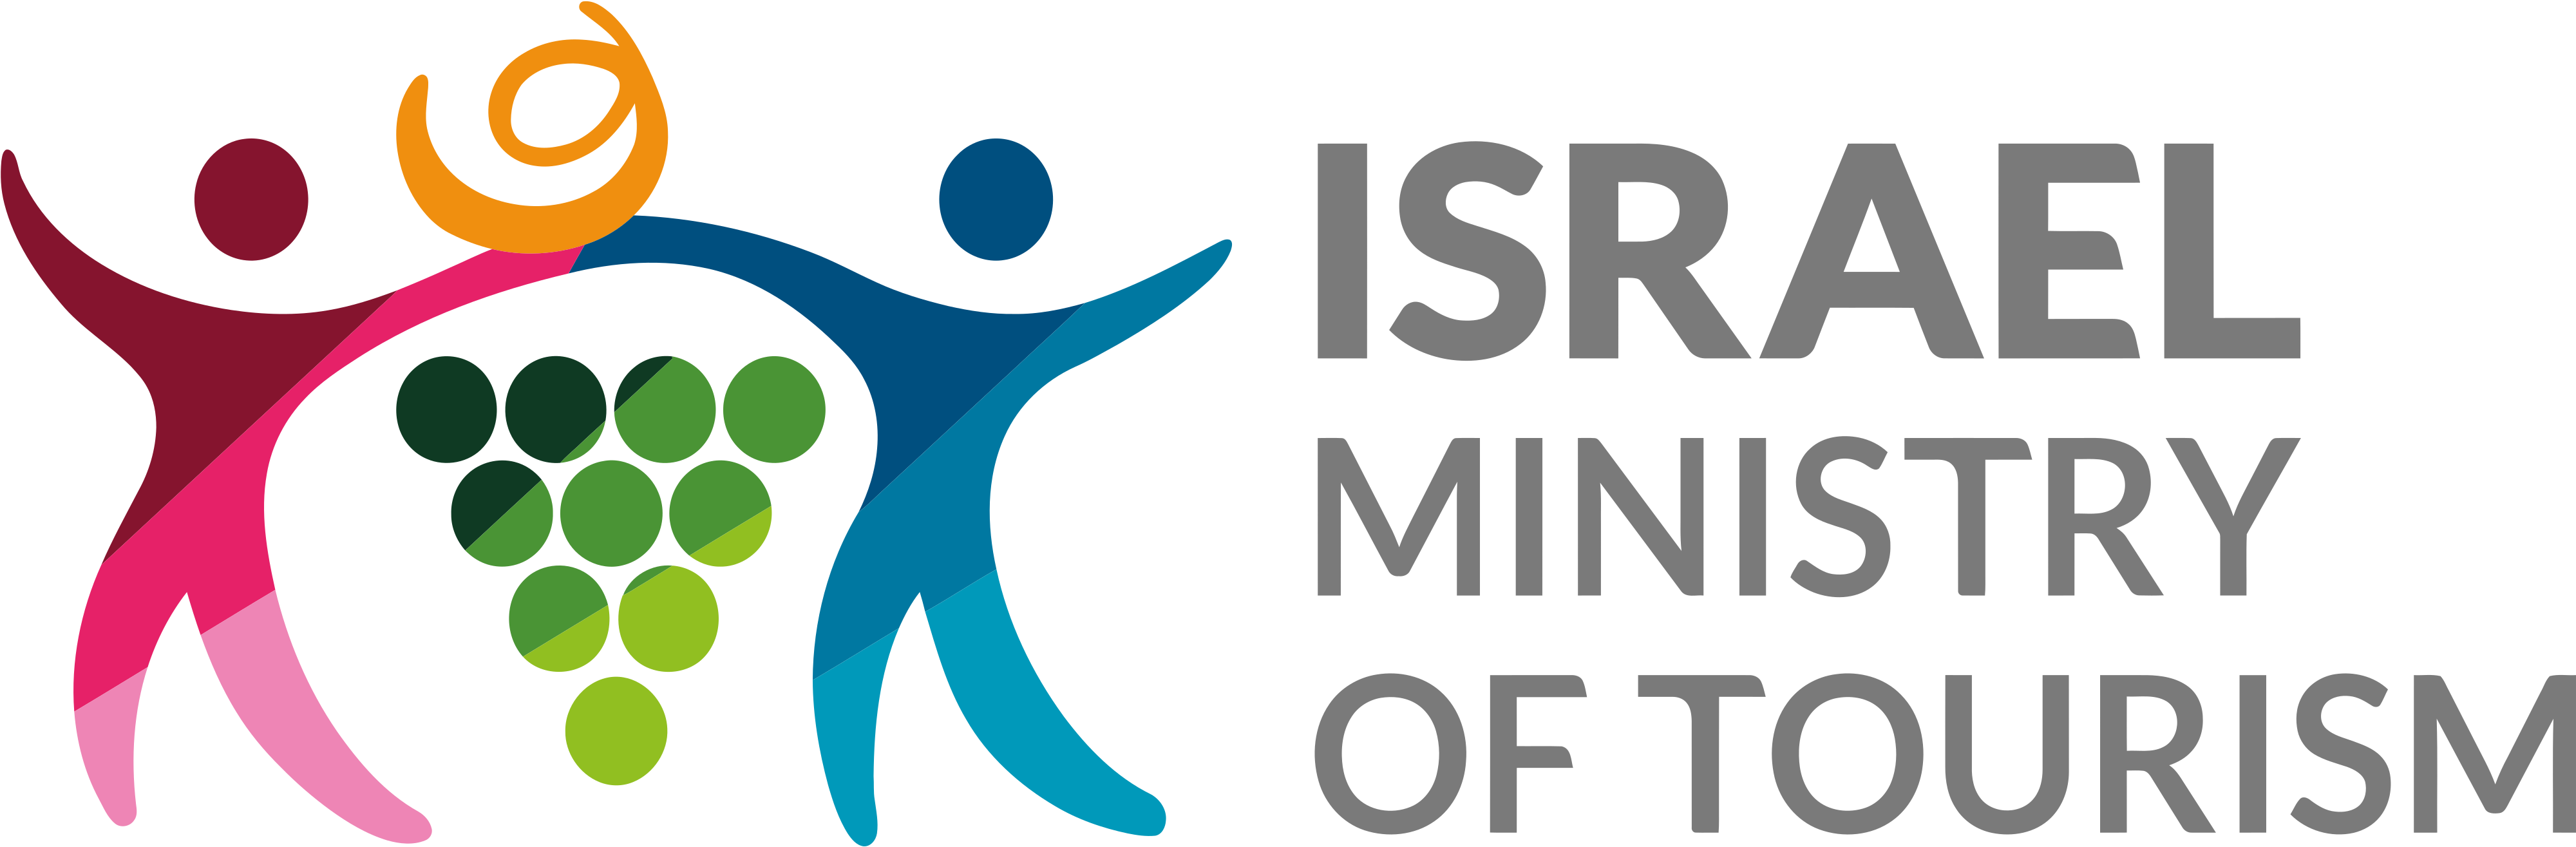 israeli tourism ministry